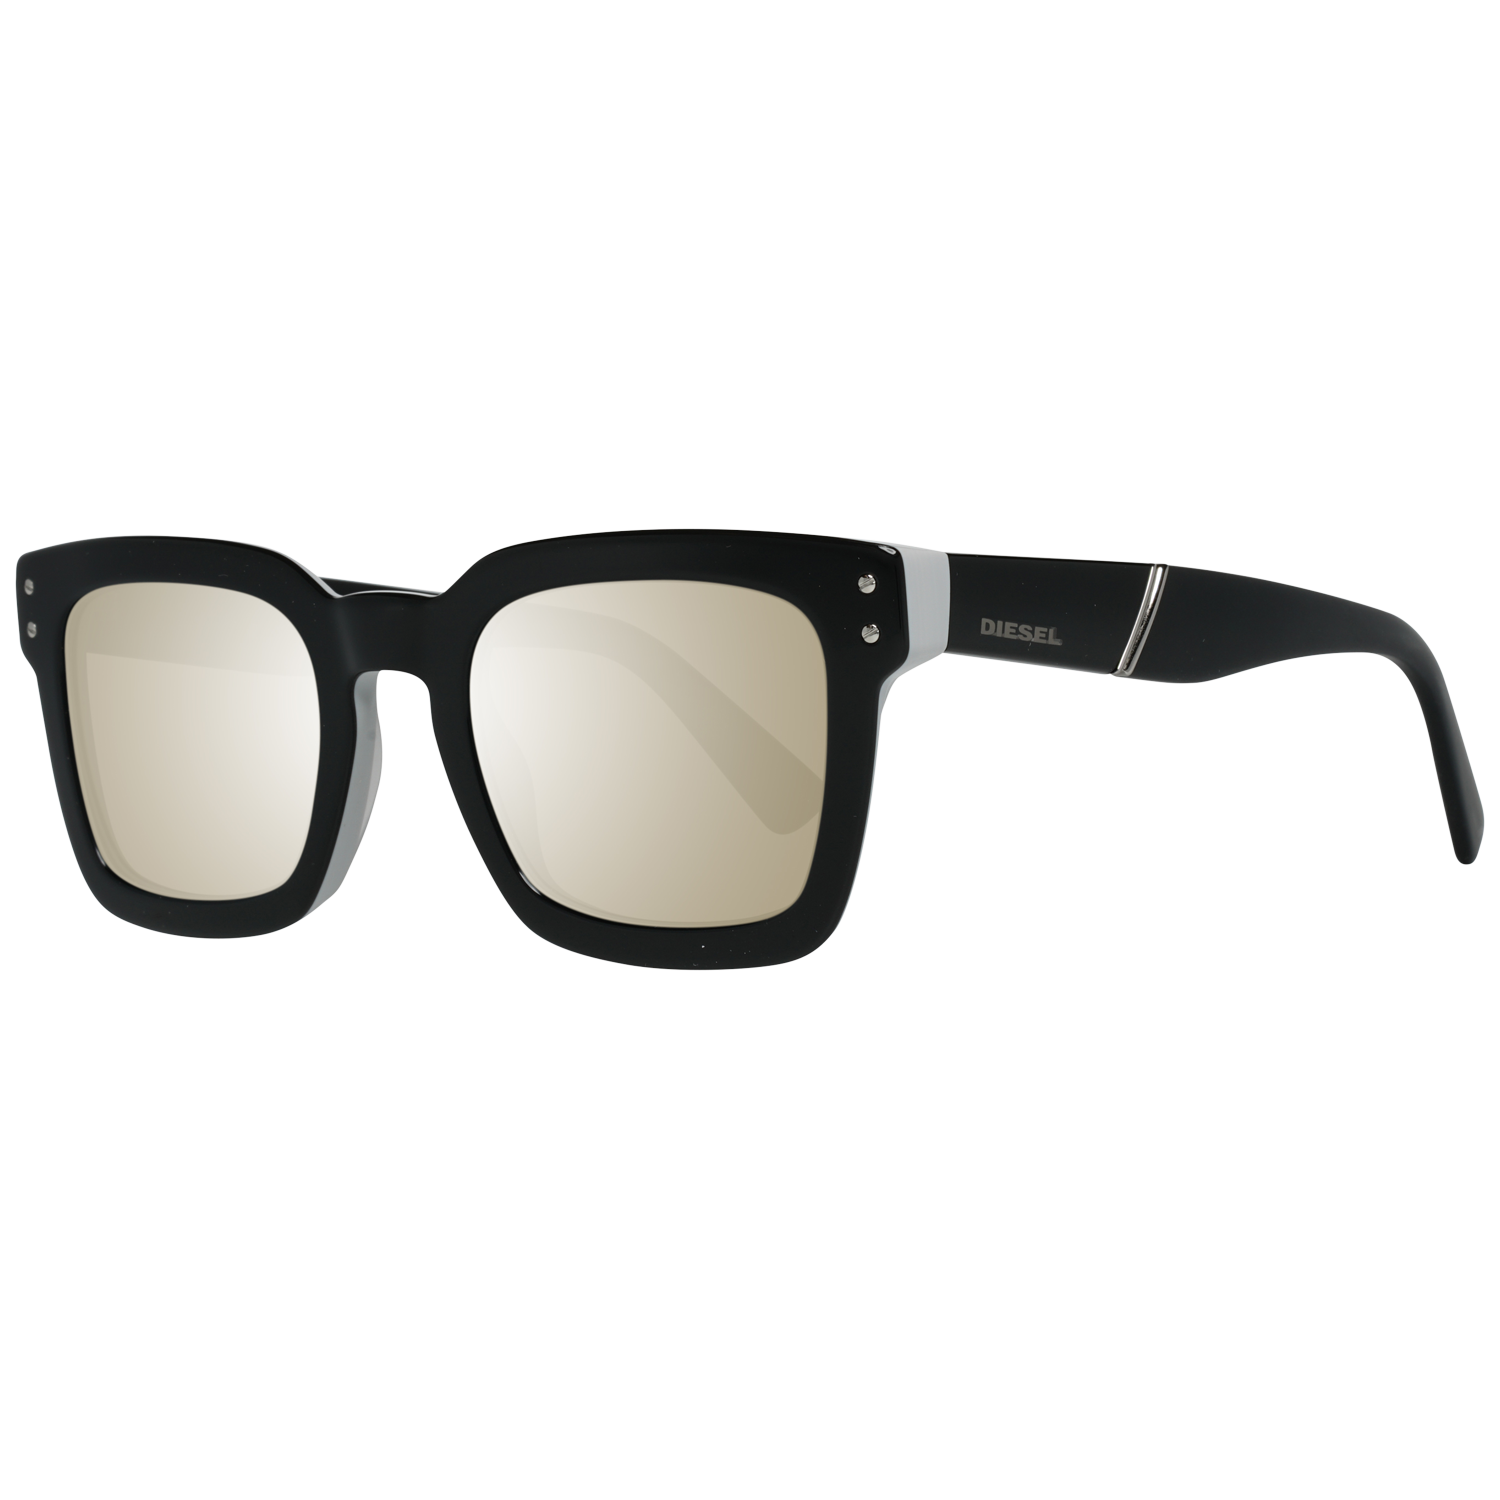 Diesel Sunglasses DL0229 05C 50